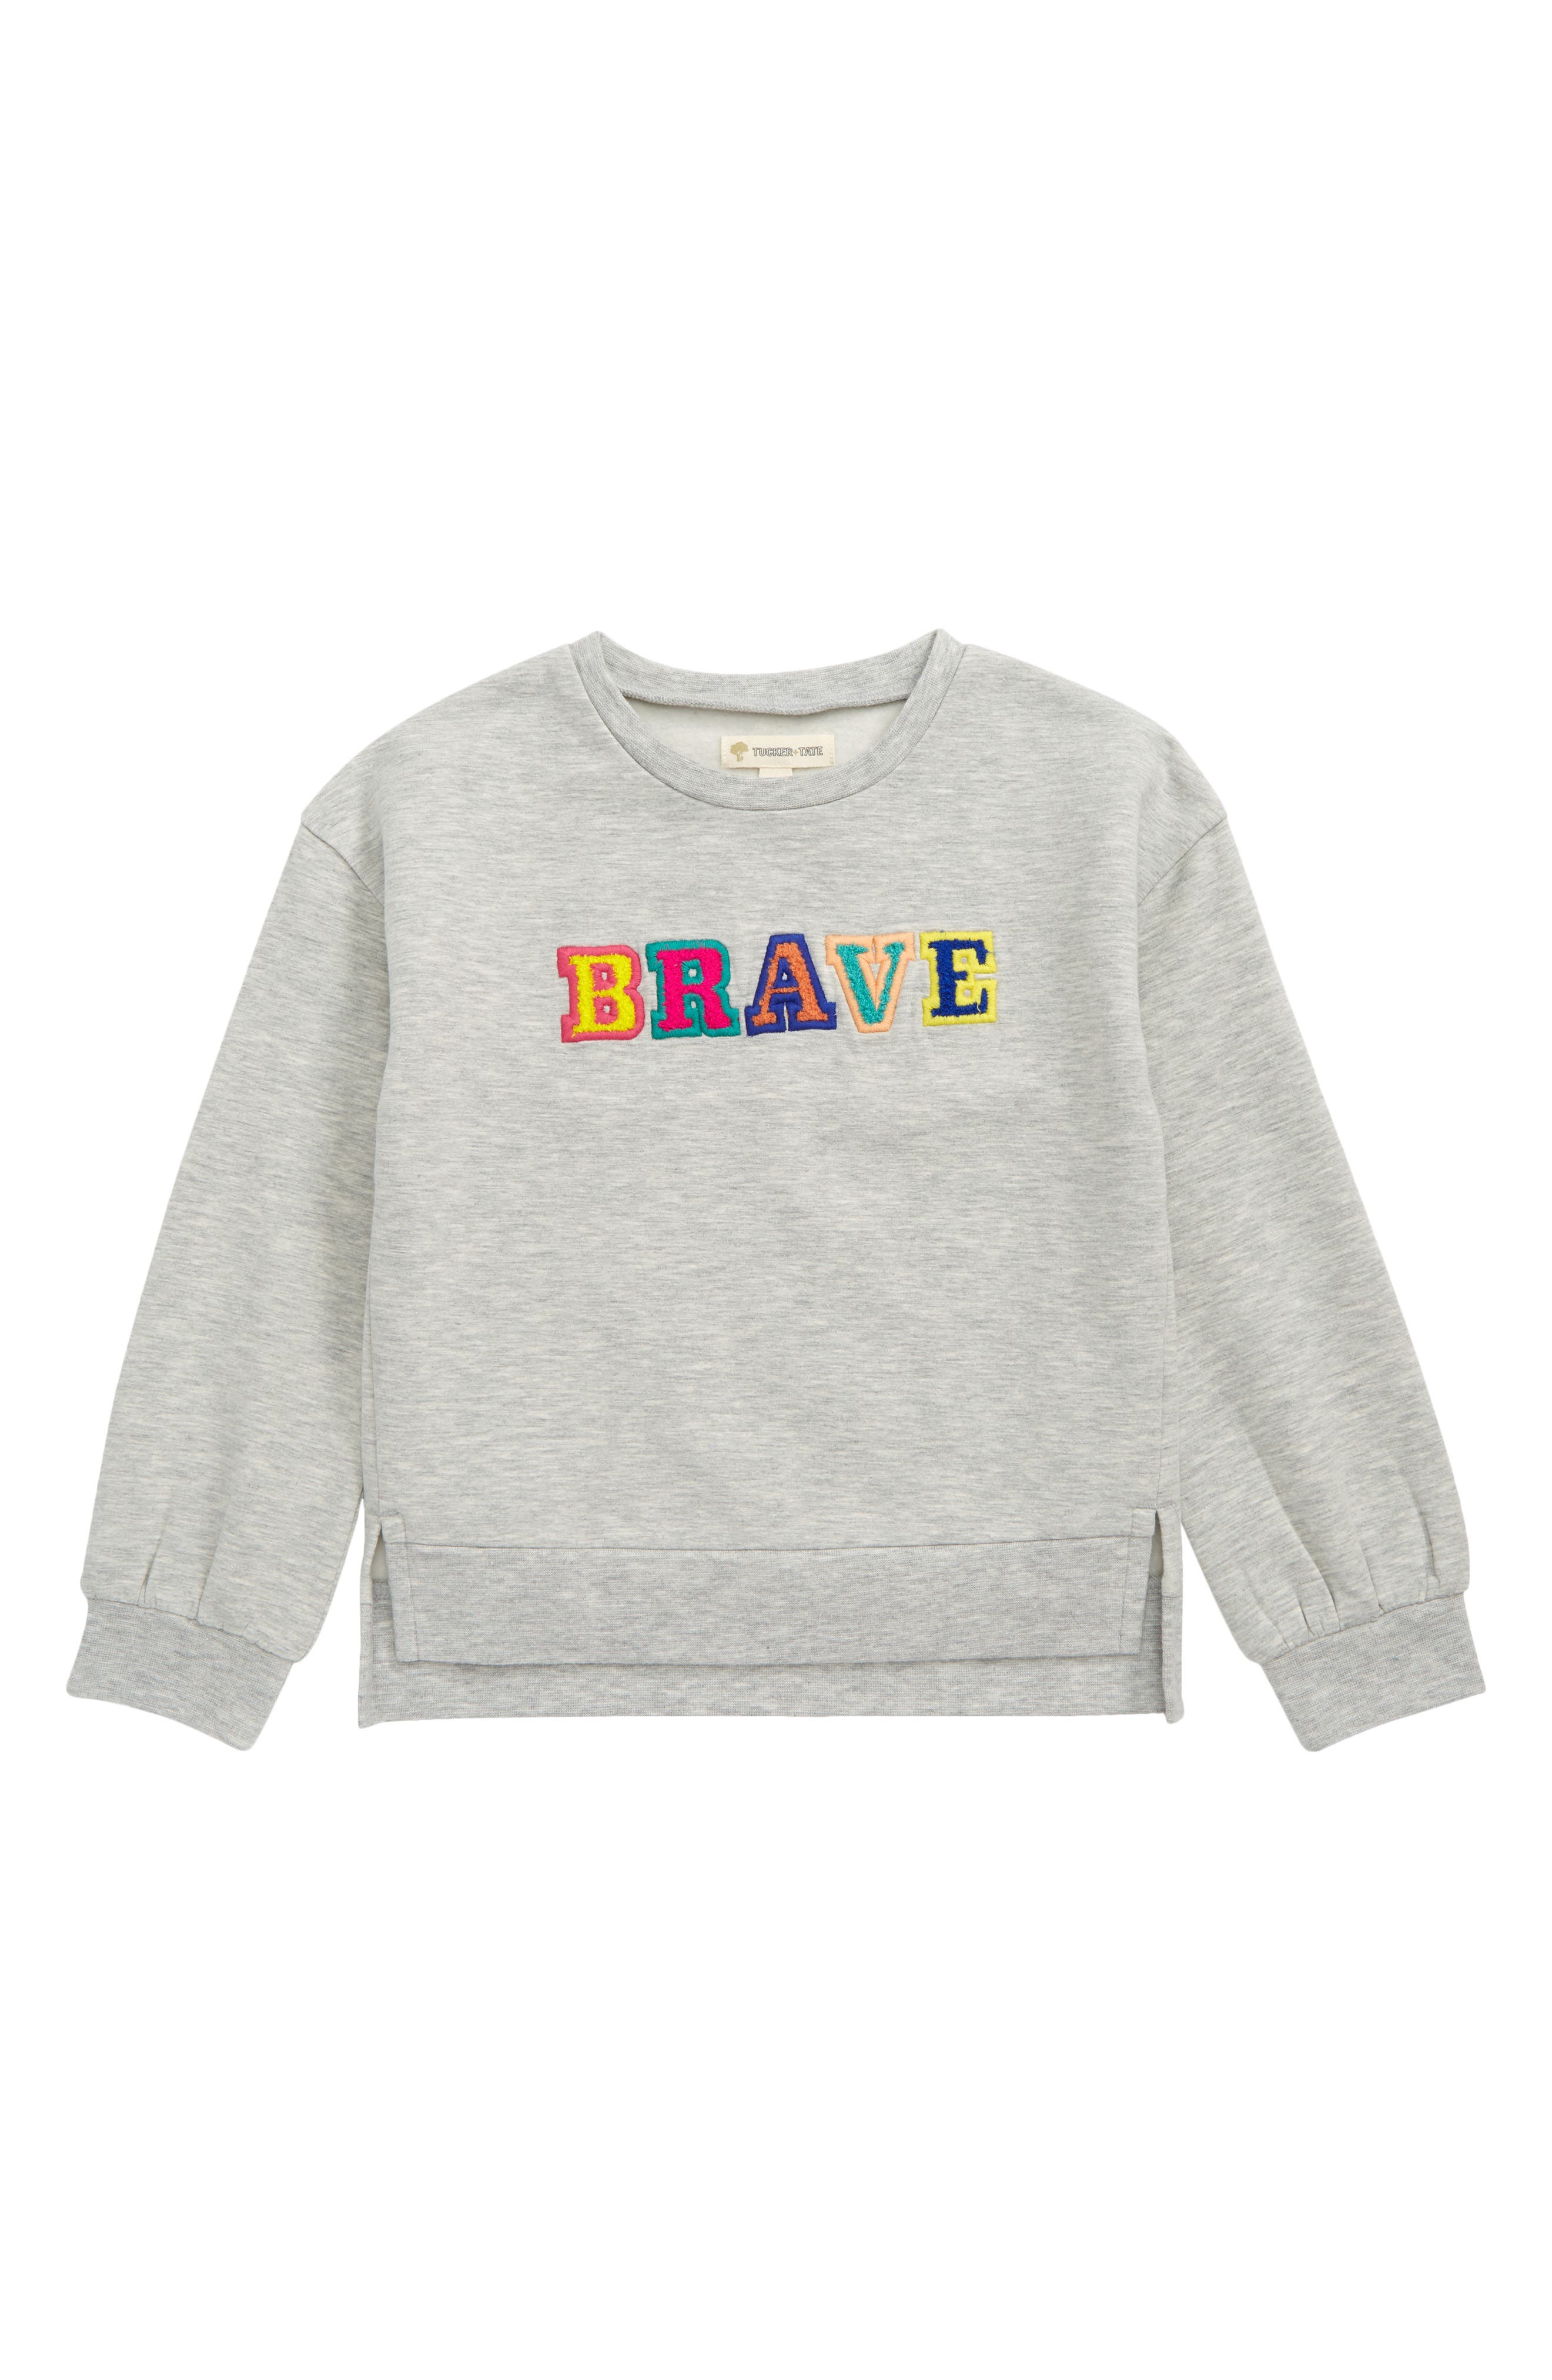 Toddler Boys & Girls Rainbow Print Sweatshirt Crewneck Sweater Long Sleeve Pullover Tops Fall Winter Clothes 